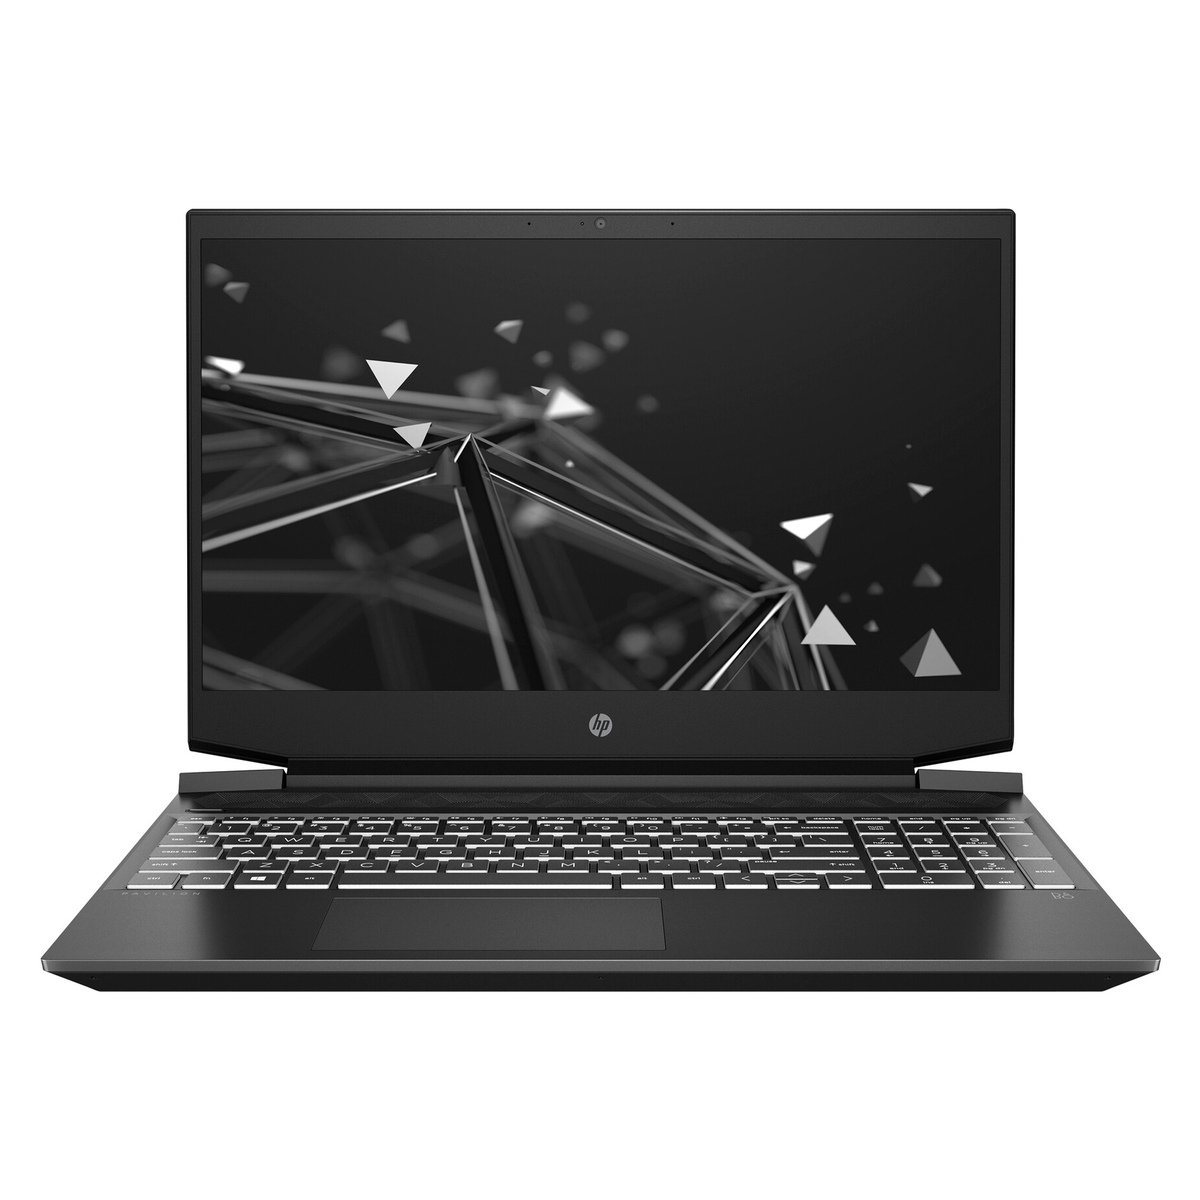 HP Pavilion Gaming Laptop 15-DK1002NE, Intel Core i7-10750H, 16GB RAM, 1TB HDD + 256GB SSD, 6GB GDDR6 NVIDIA VGA, 15.6"FHD, Windows 10, Black